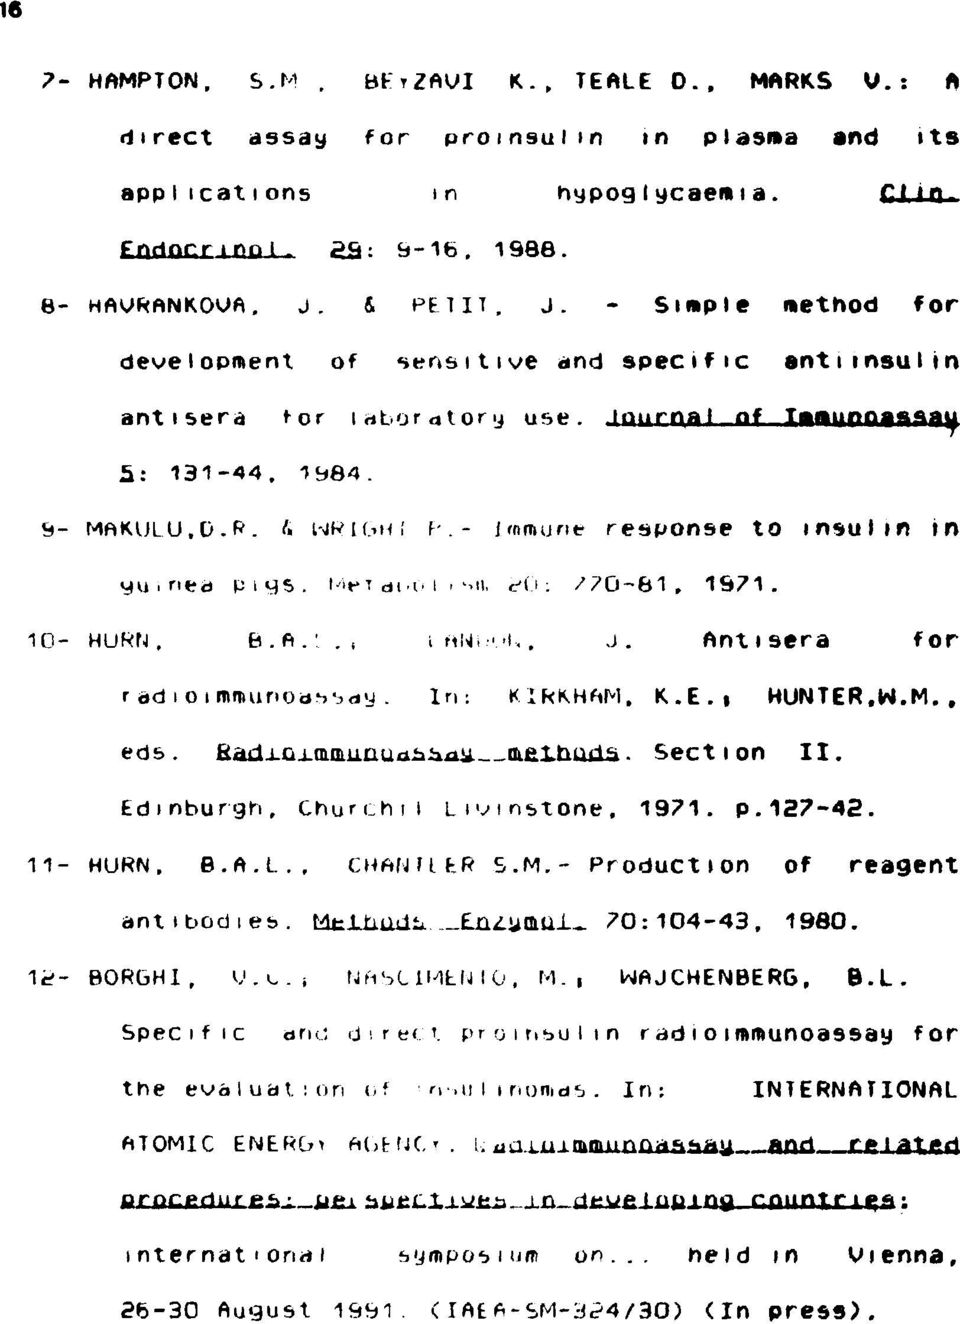 - immune response to insulin in yu i nea piys. i-'ietdi.m r',», c-v-. /7Ü-61, 1971. 10- HURt4, B. A.'.., i HNi.-'.-i,, J. Antiôera for radioimiminoai^y. In: KIKKHAM. K.E.i HUNTER.W.M., eds.